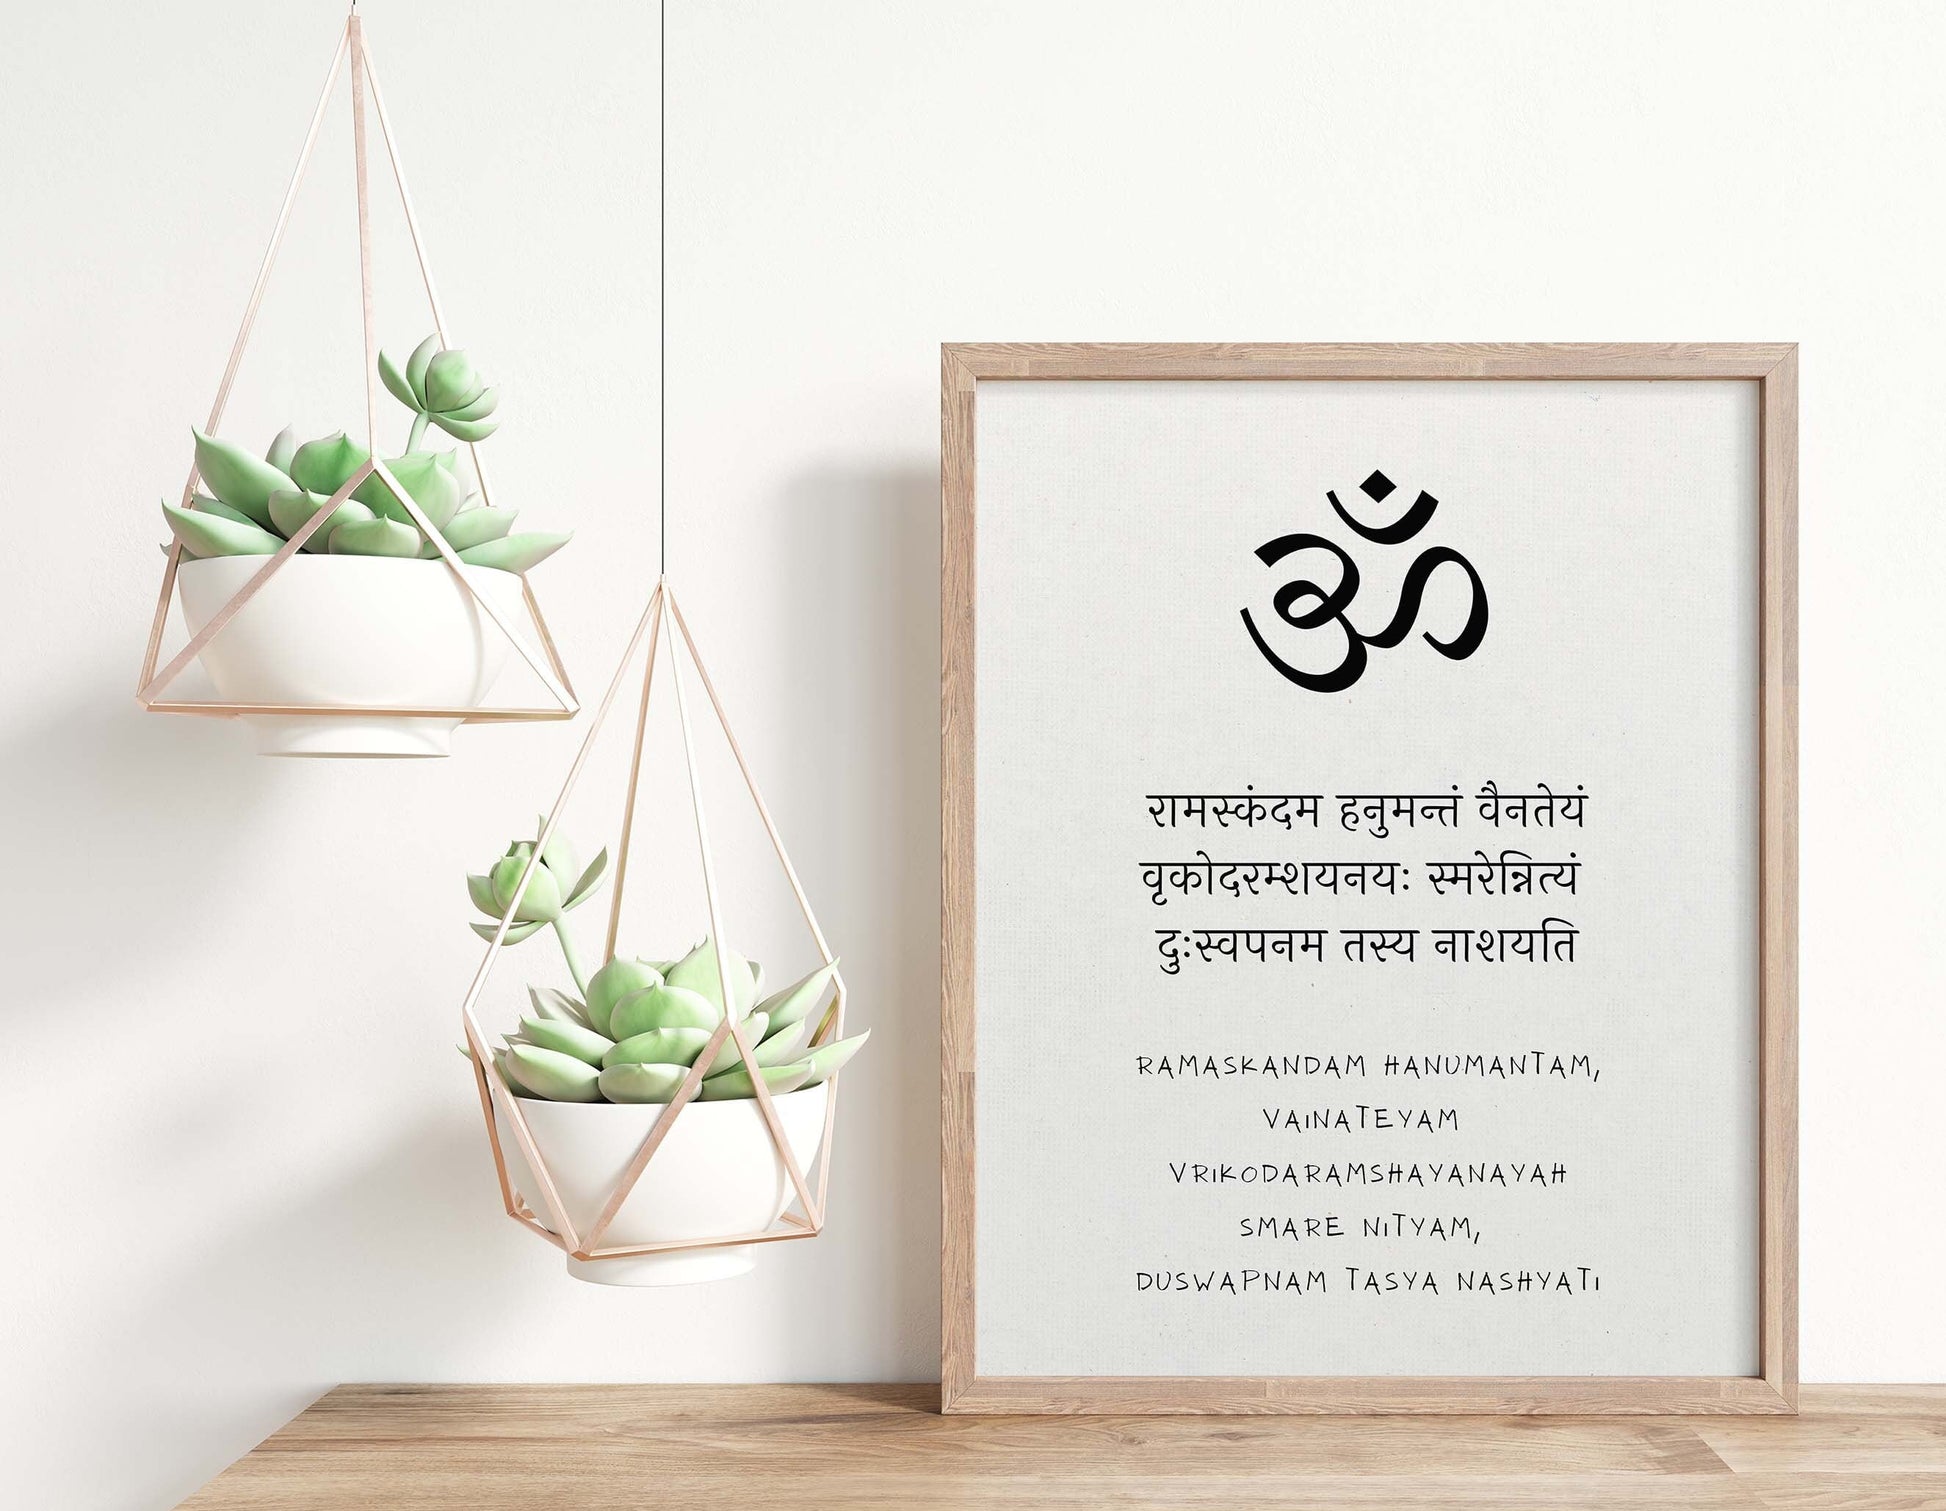 Hanuman Sleep mantra Chant for meditation Poster in black & white in woodframe mockup